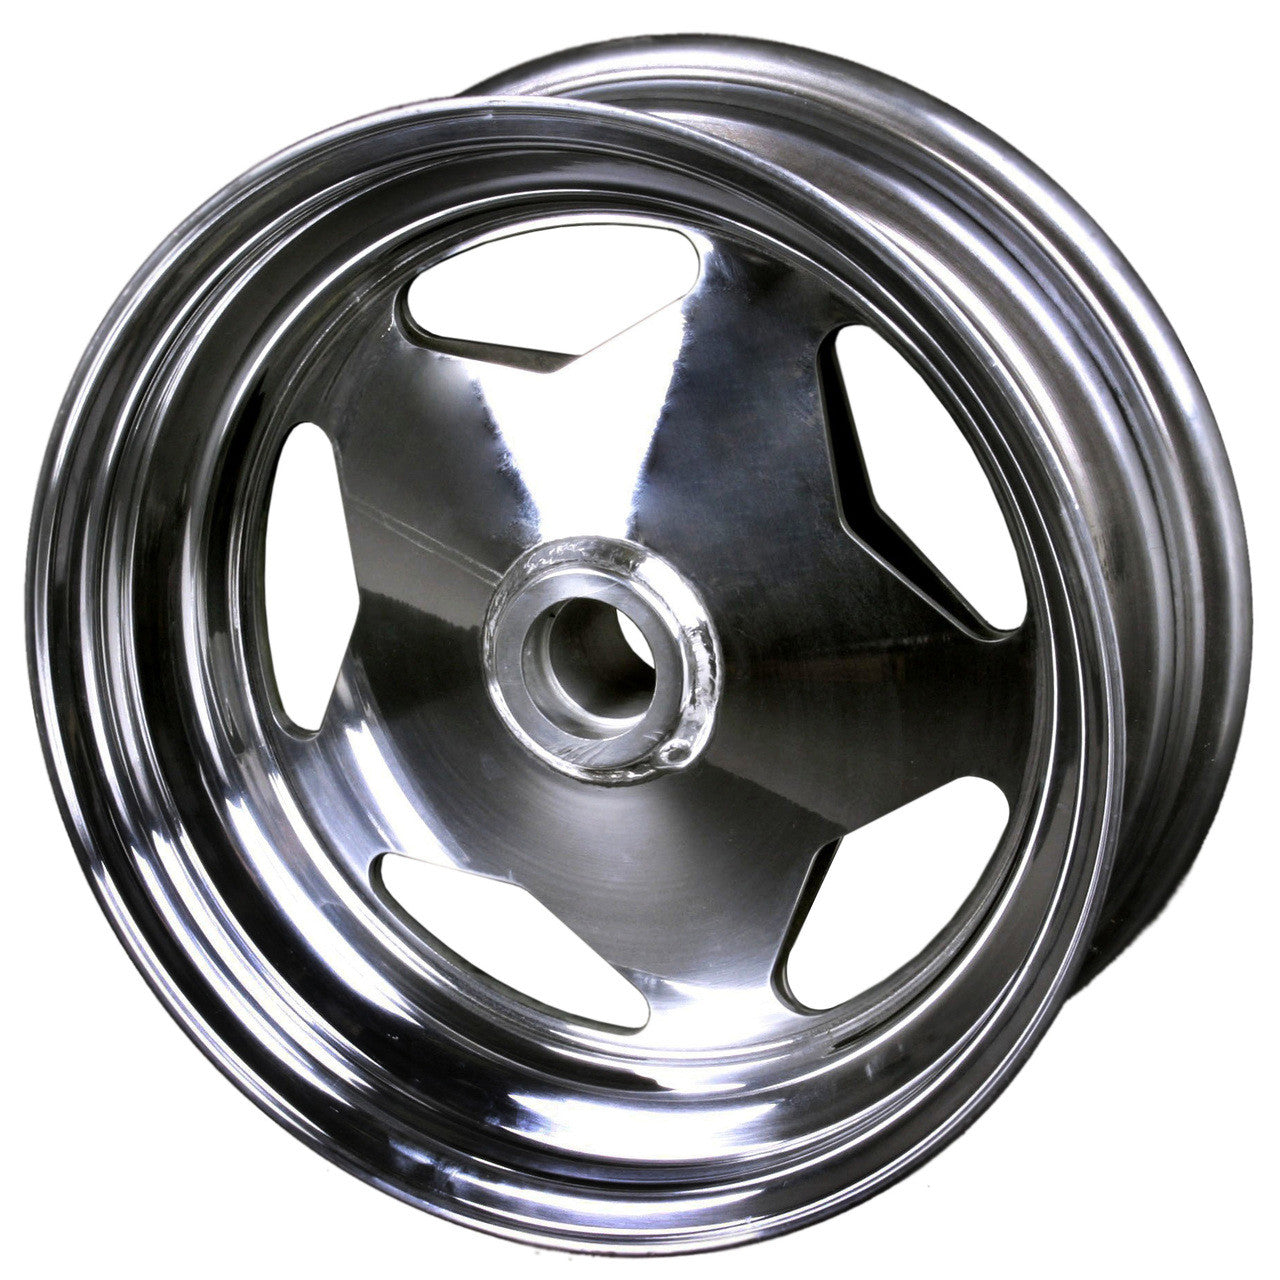 Latest Rage Star Cut Aluminum Spindle Mount Wheel, Vw King Pin 15" X 4". Pair 